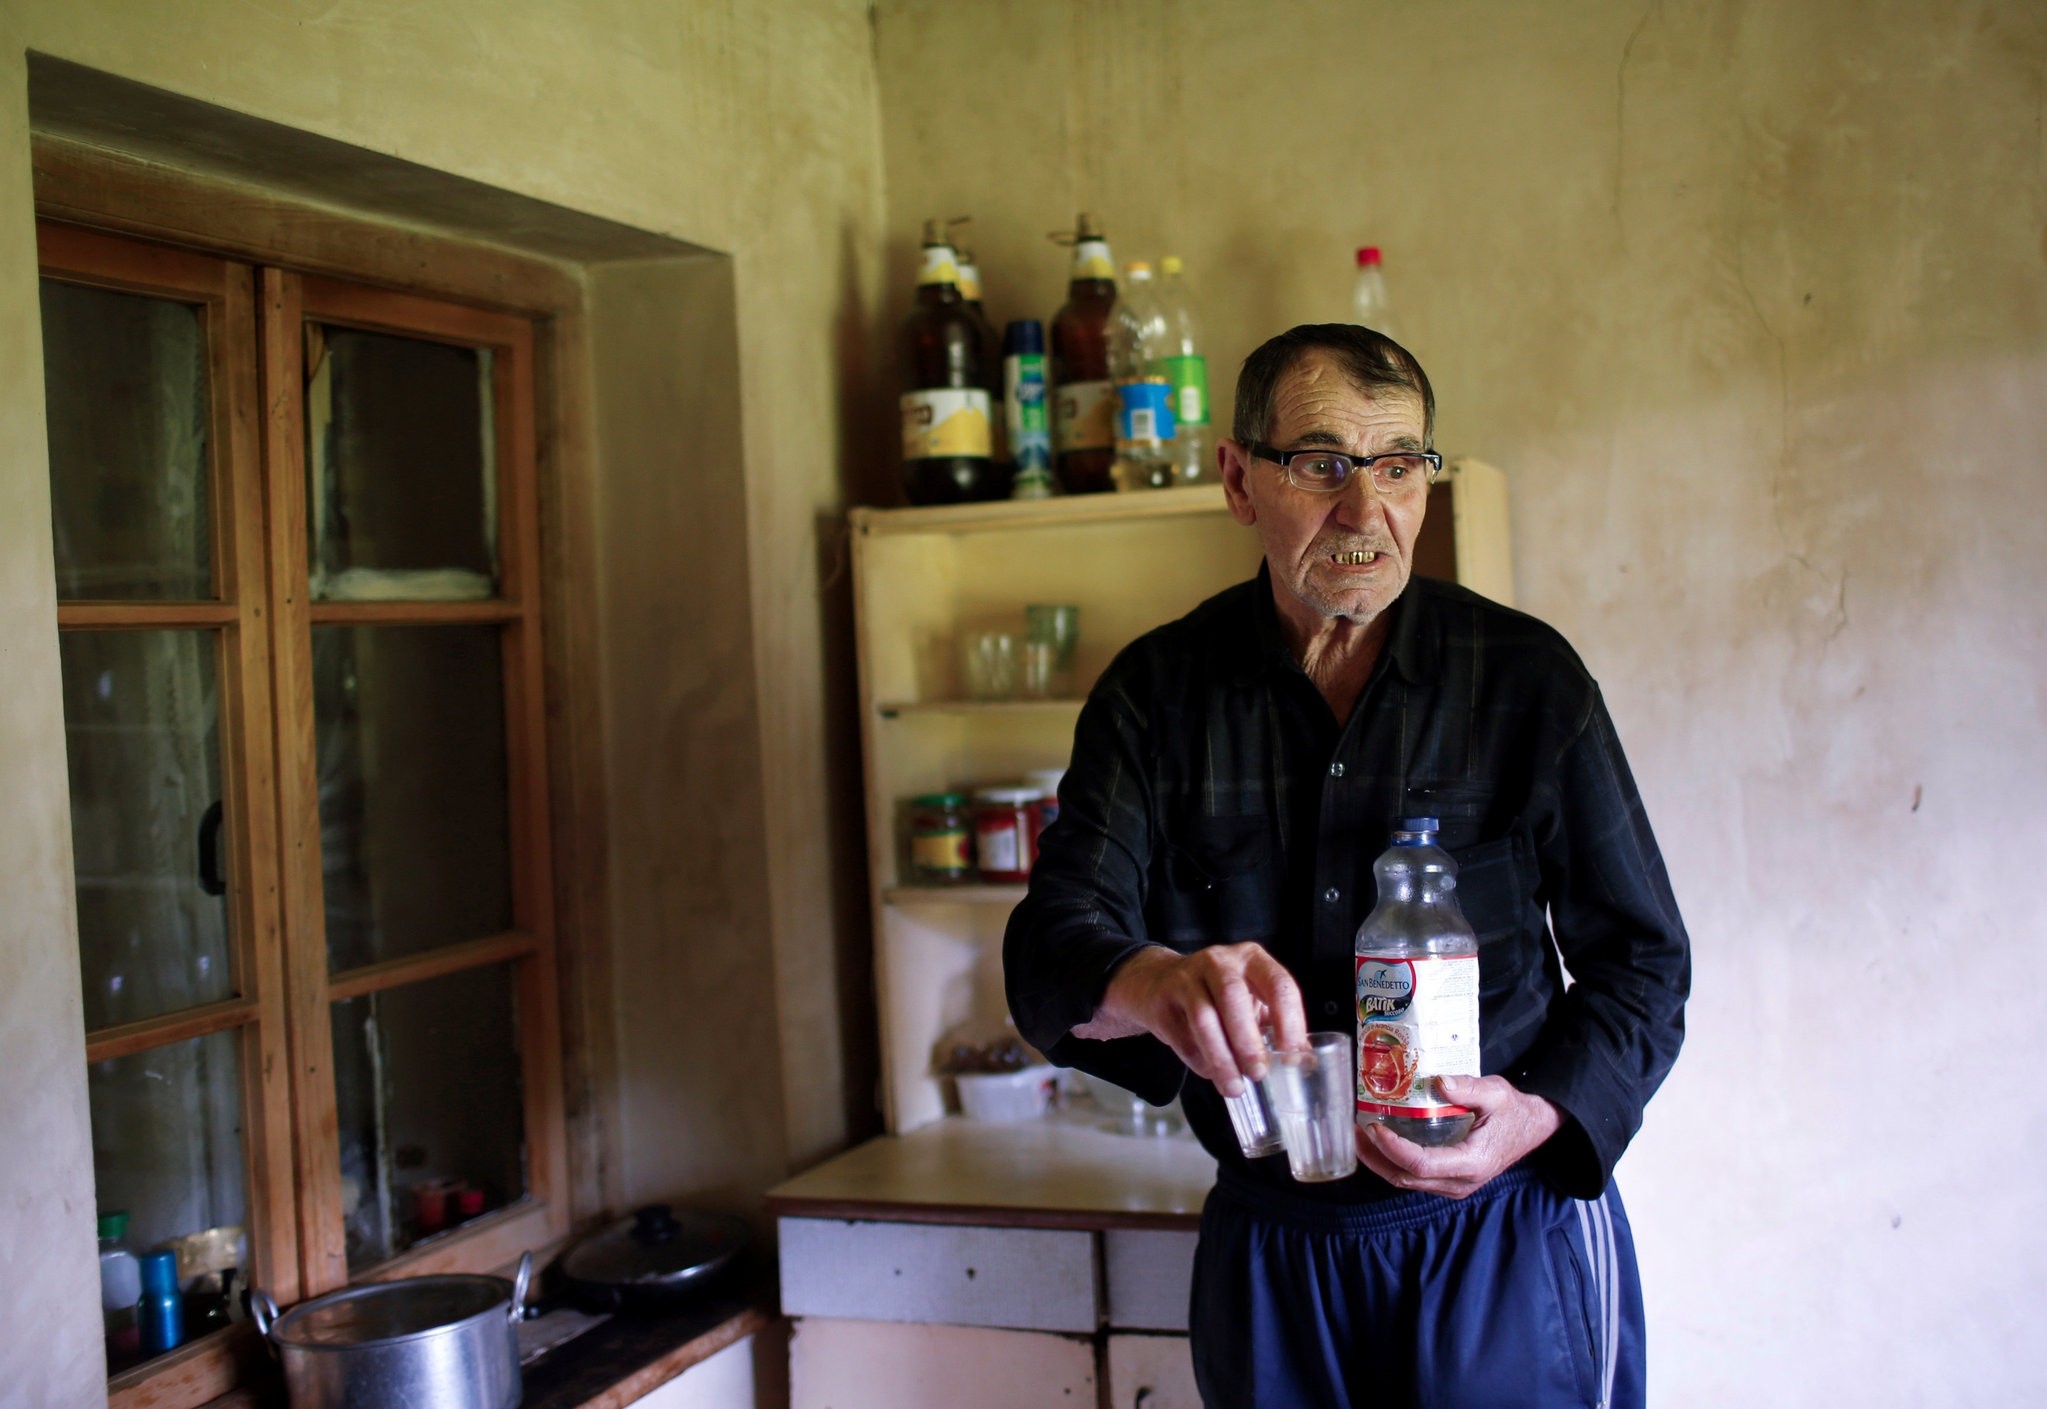 Temur Batirashvili, father of Tarkhan Batirashvili, speaks during an interview at his home in the village of Birkiani in the Pankisi Gorge, Georgia, May 19, 2016. (REUTERS Photo)